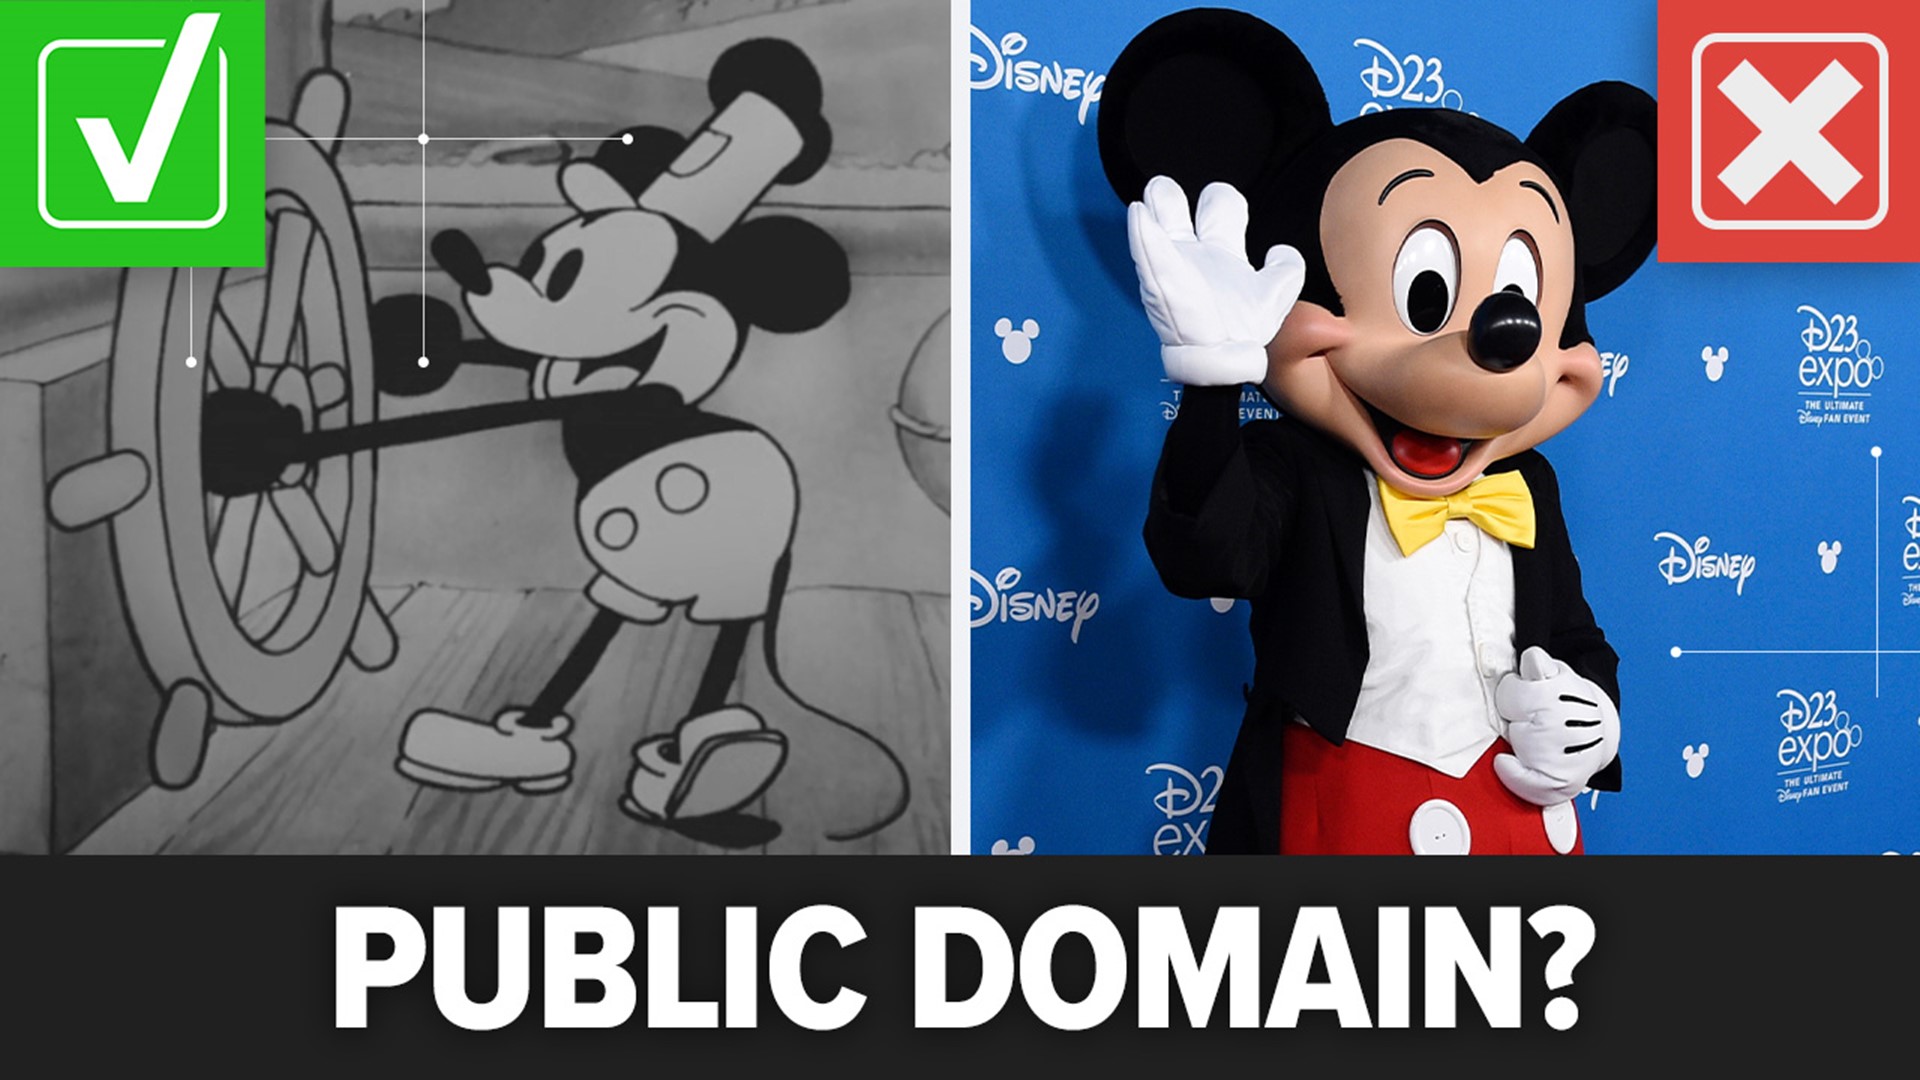 Walt Disney's Mickey Mouse: Steamboat Willie (1928) - Filmaffinity